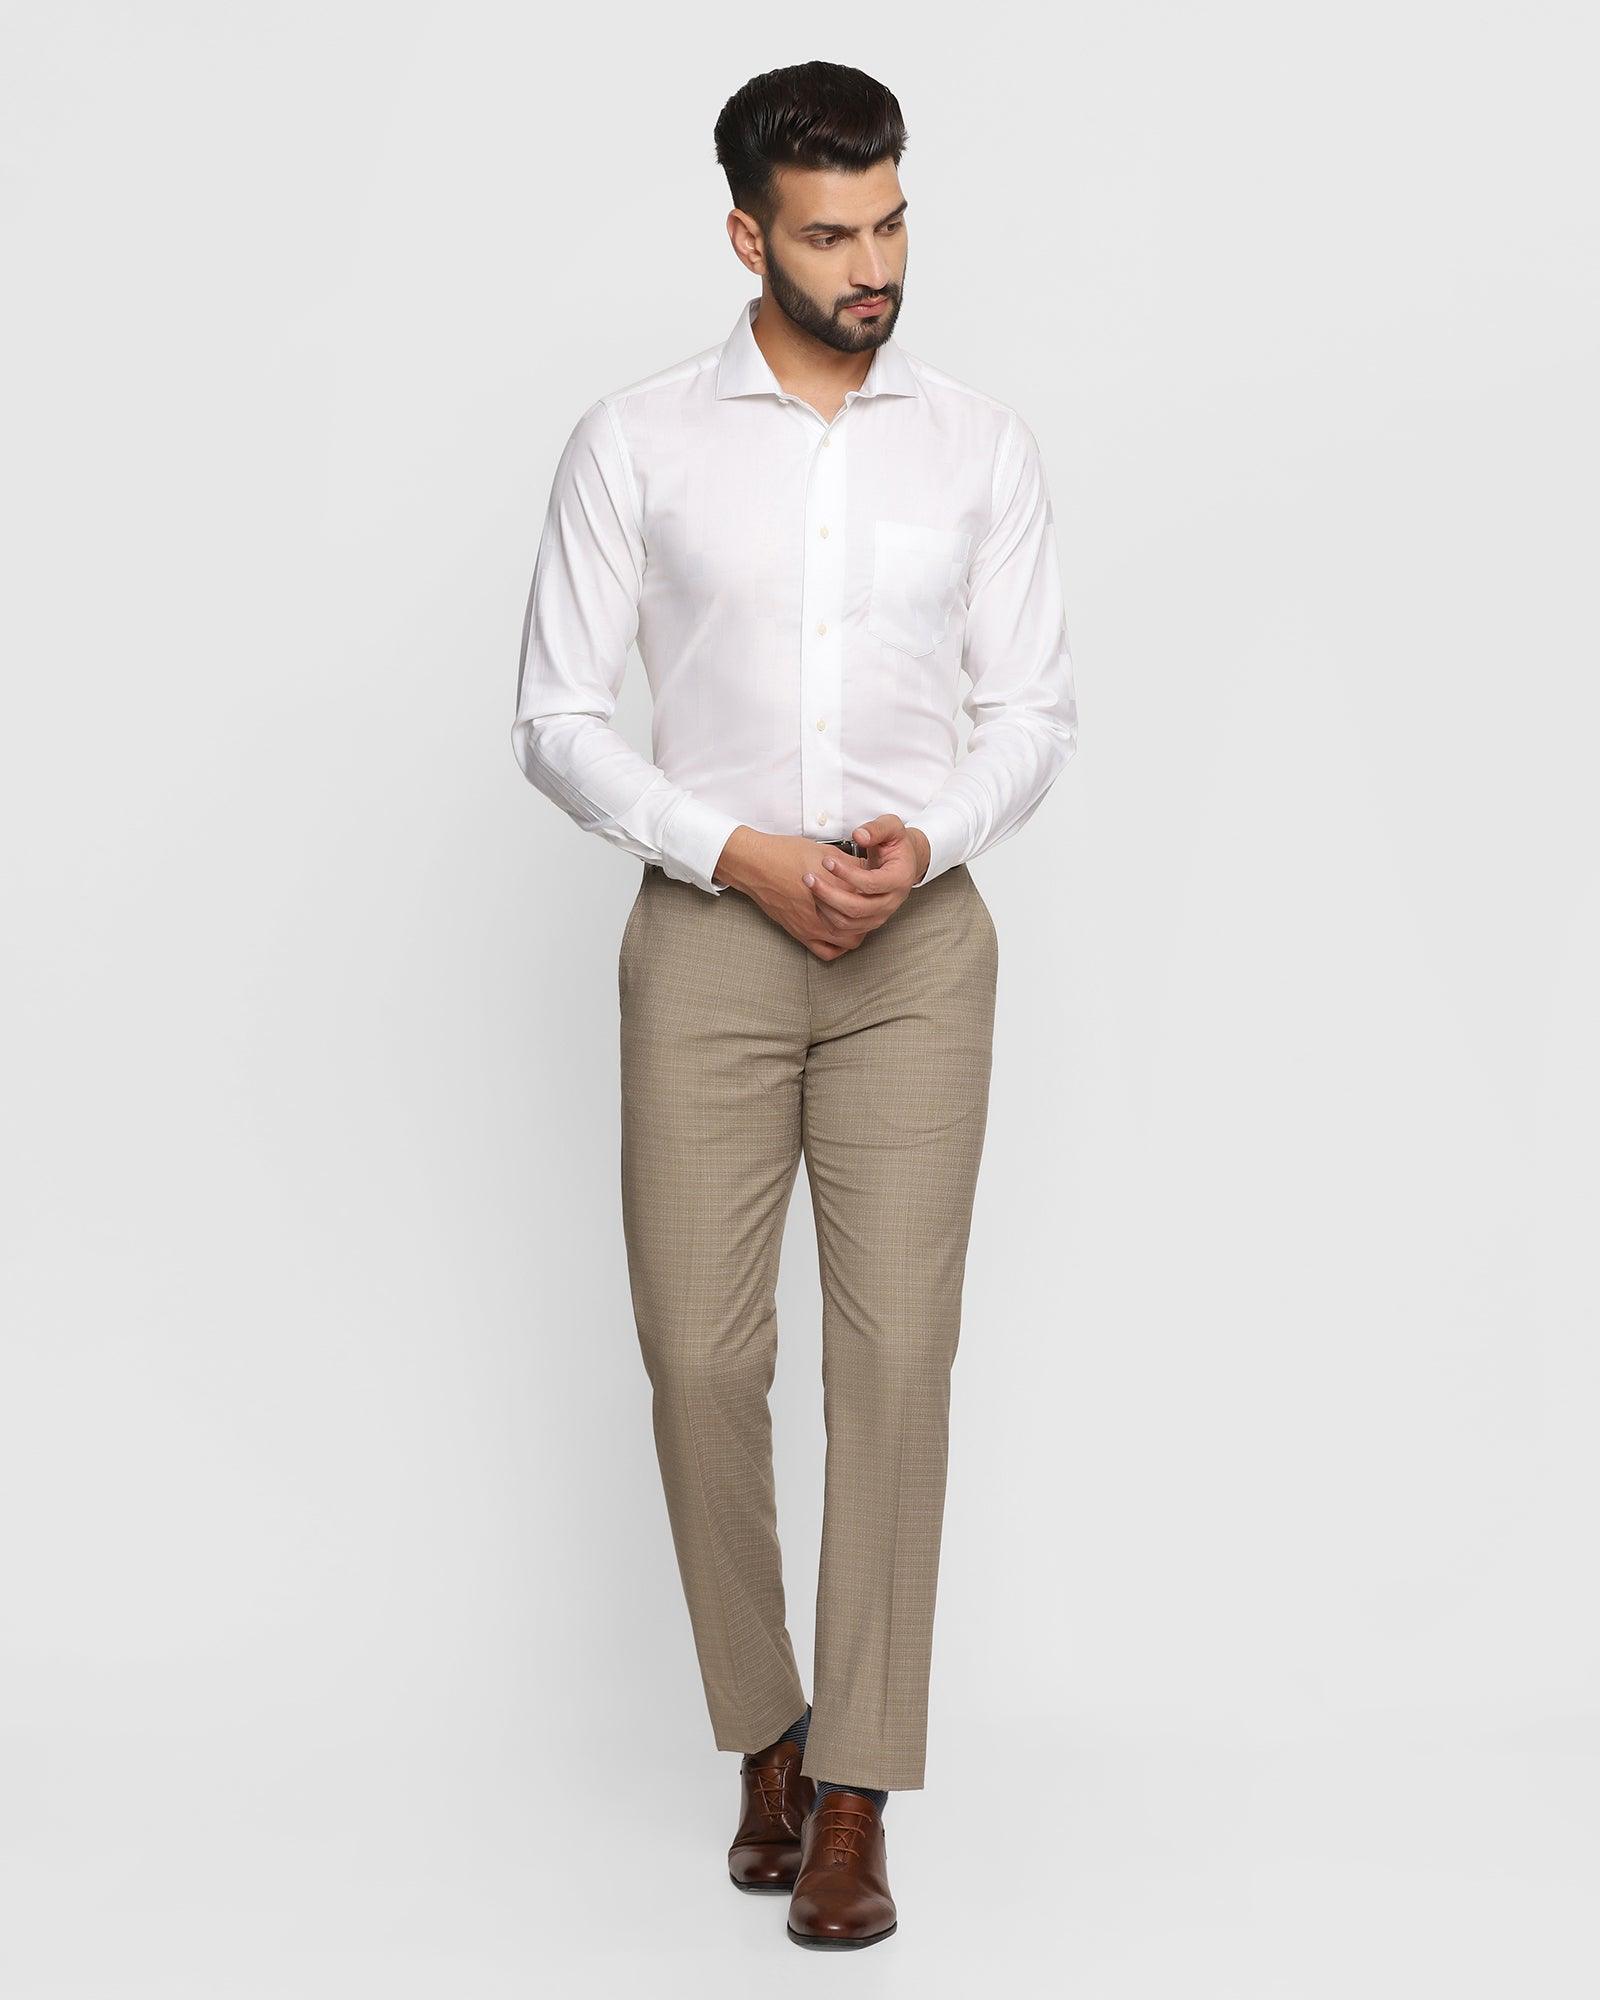 Buy online ASHTOM Fawn Color Formal Cotton Trouser Regular Fit For Men